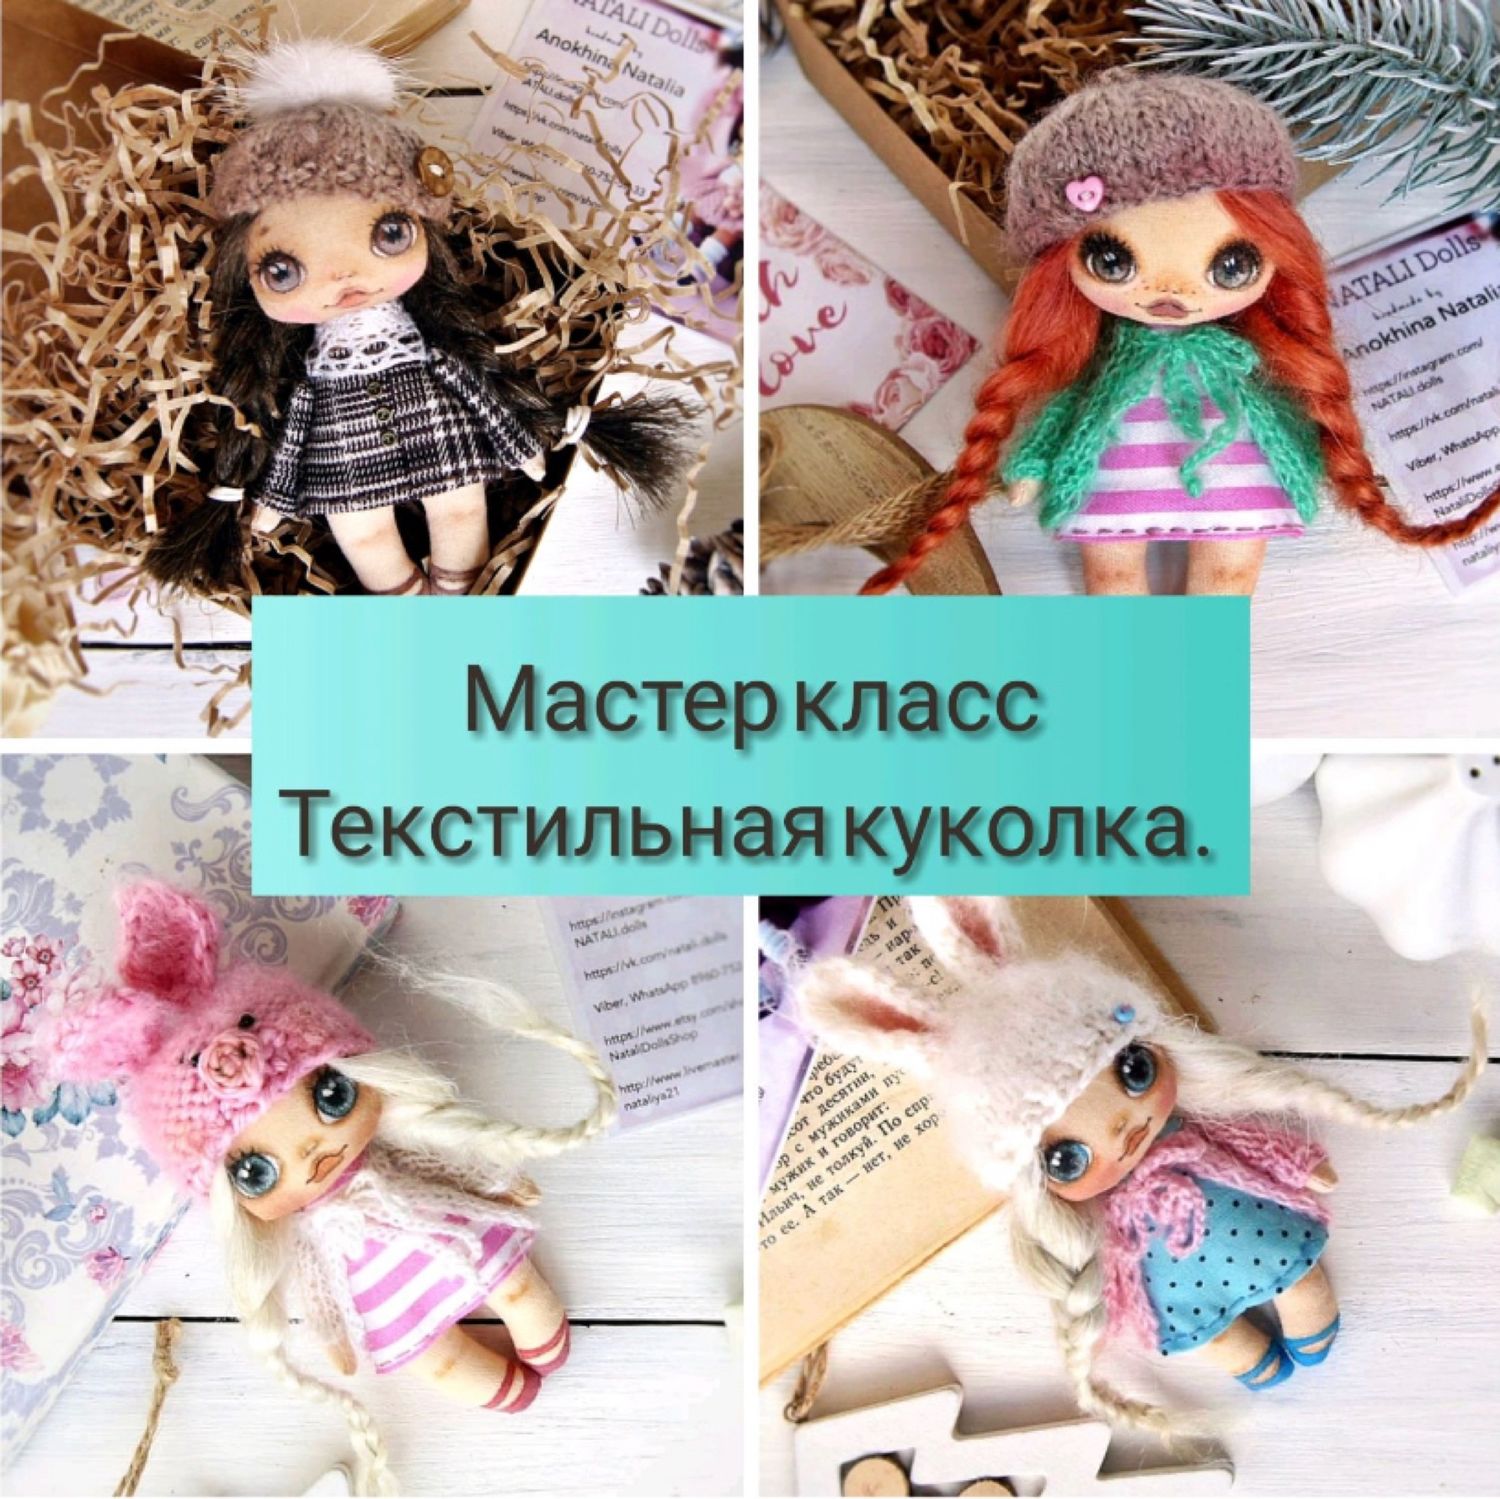 Русская народная кукла «Жажда творчества»